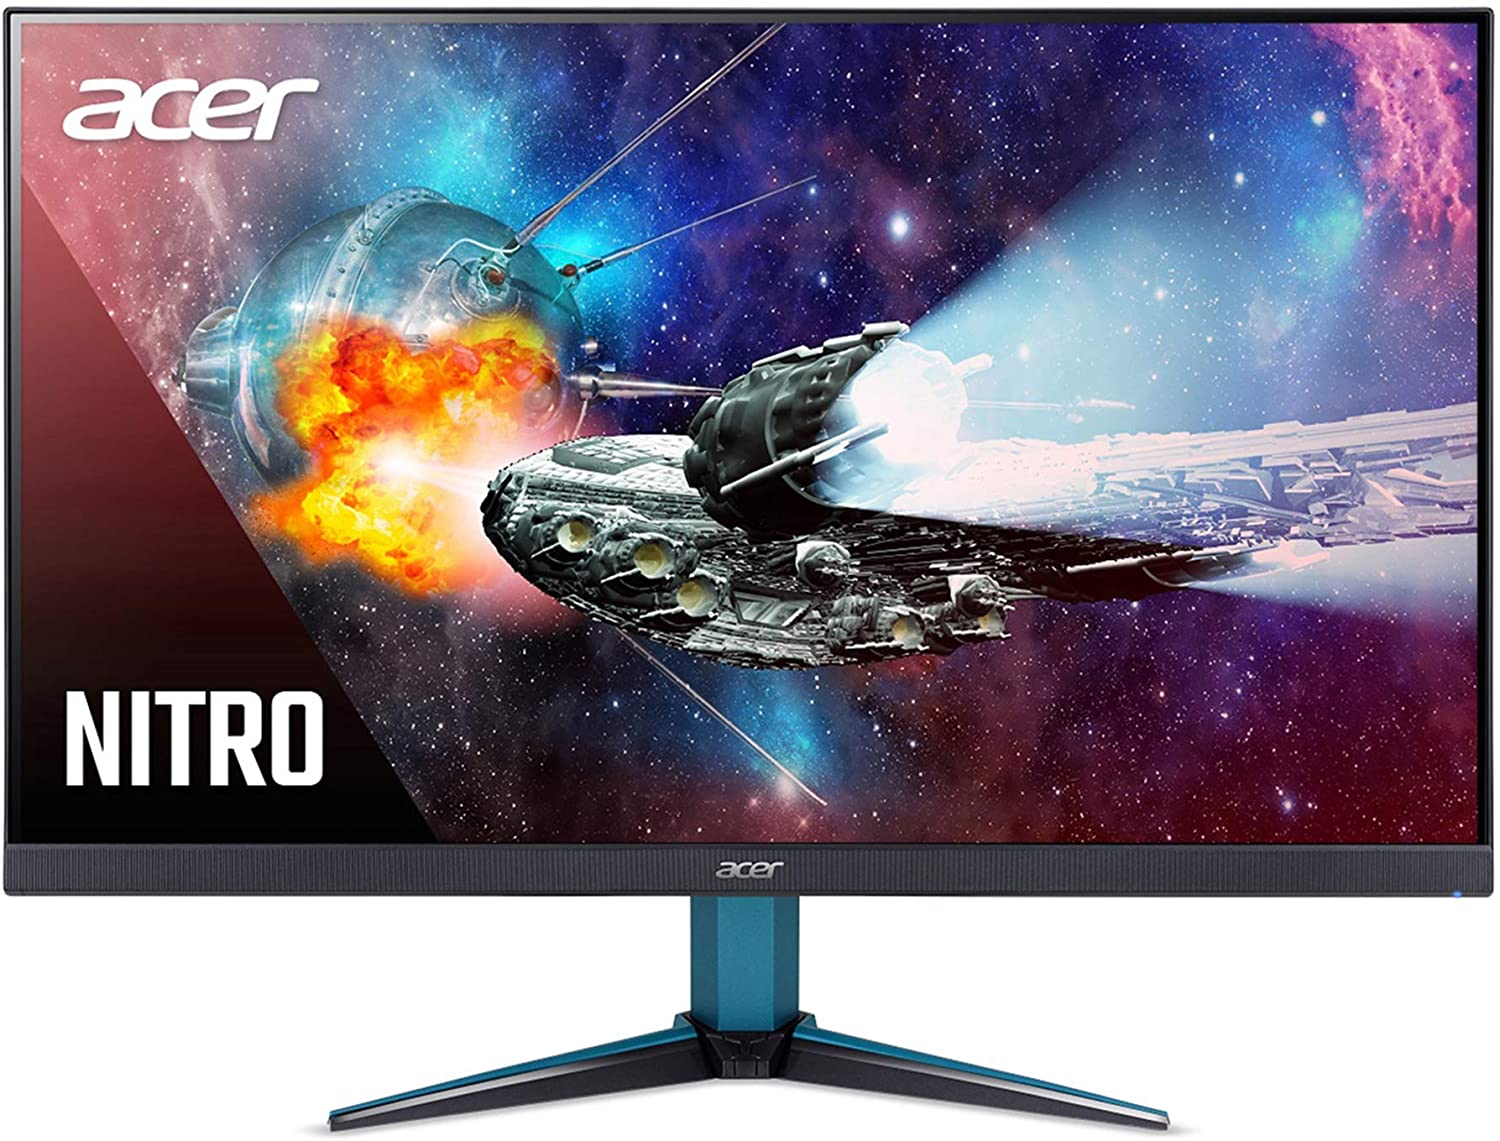 27" Acer Nitro VG271U 1440p 144Hz IPS FREESYNC Gaming Monitor $200 + free s/h at Amazon